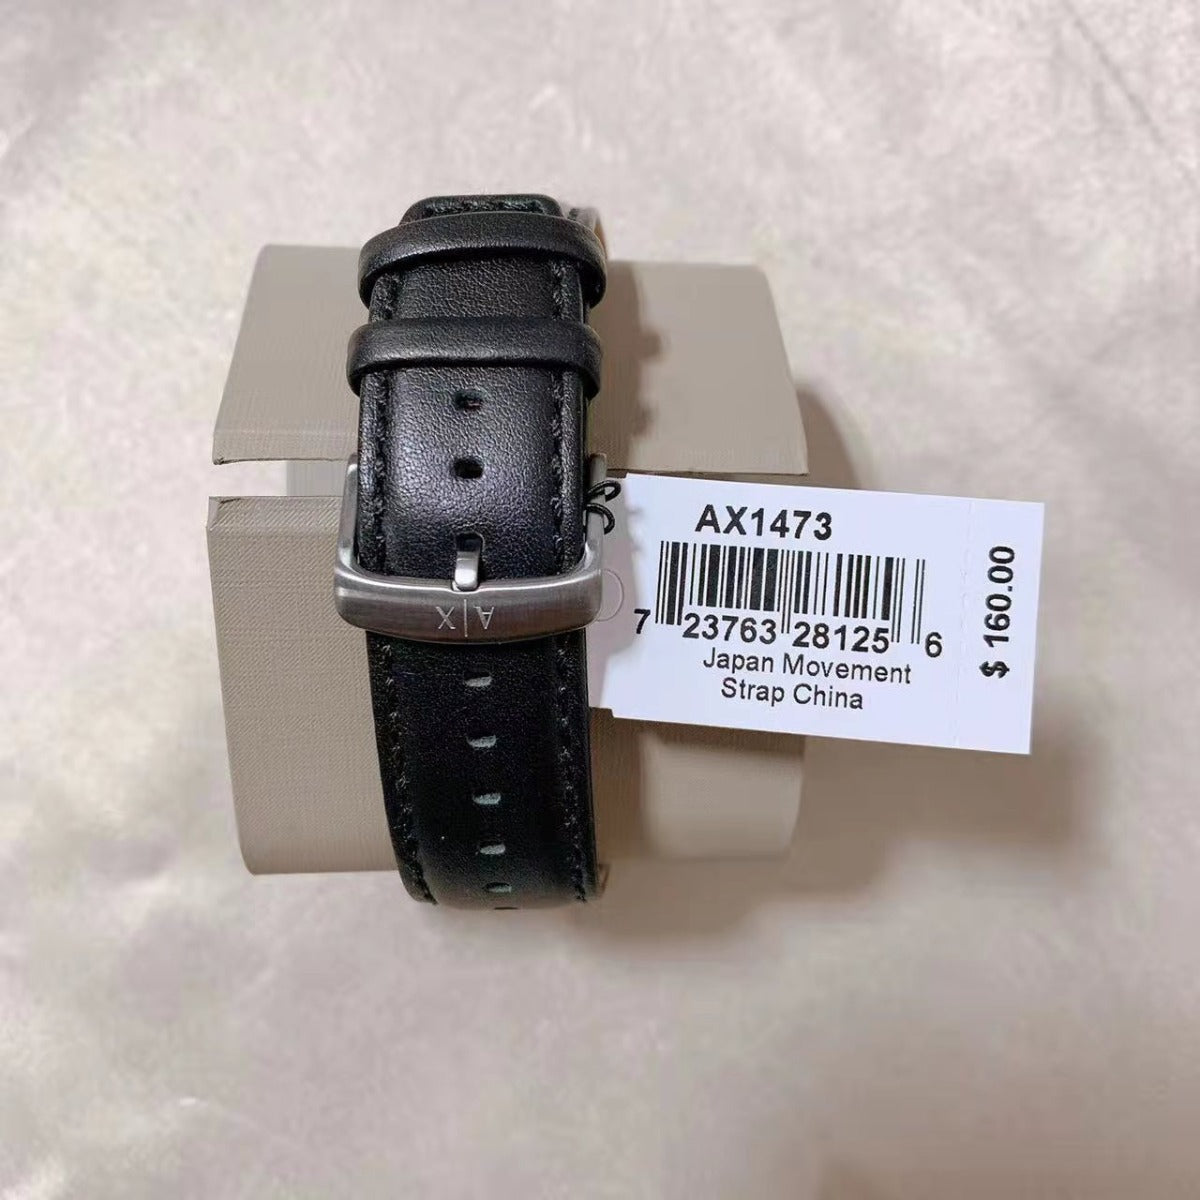 Armani Exchange AX1473 Three-Hand Date Black Leather Watch - 723763281256